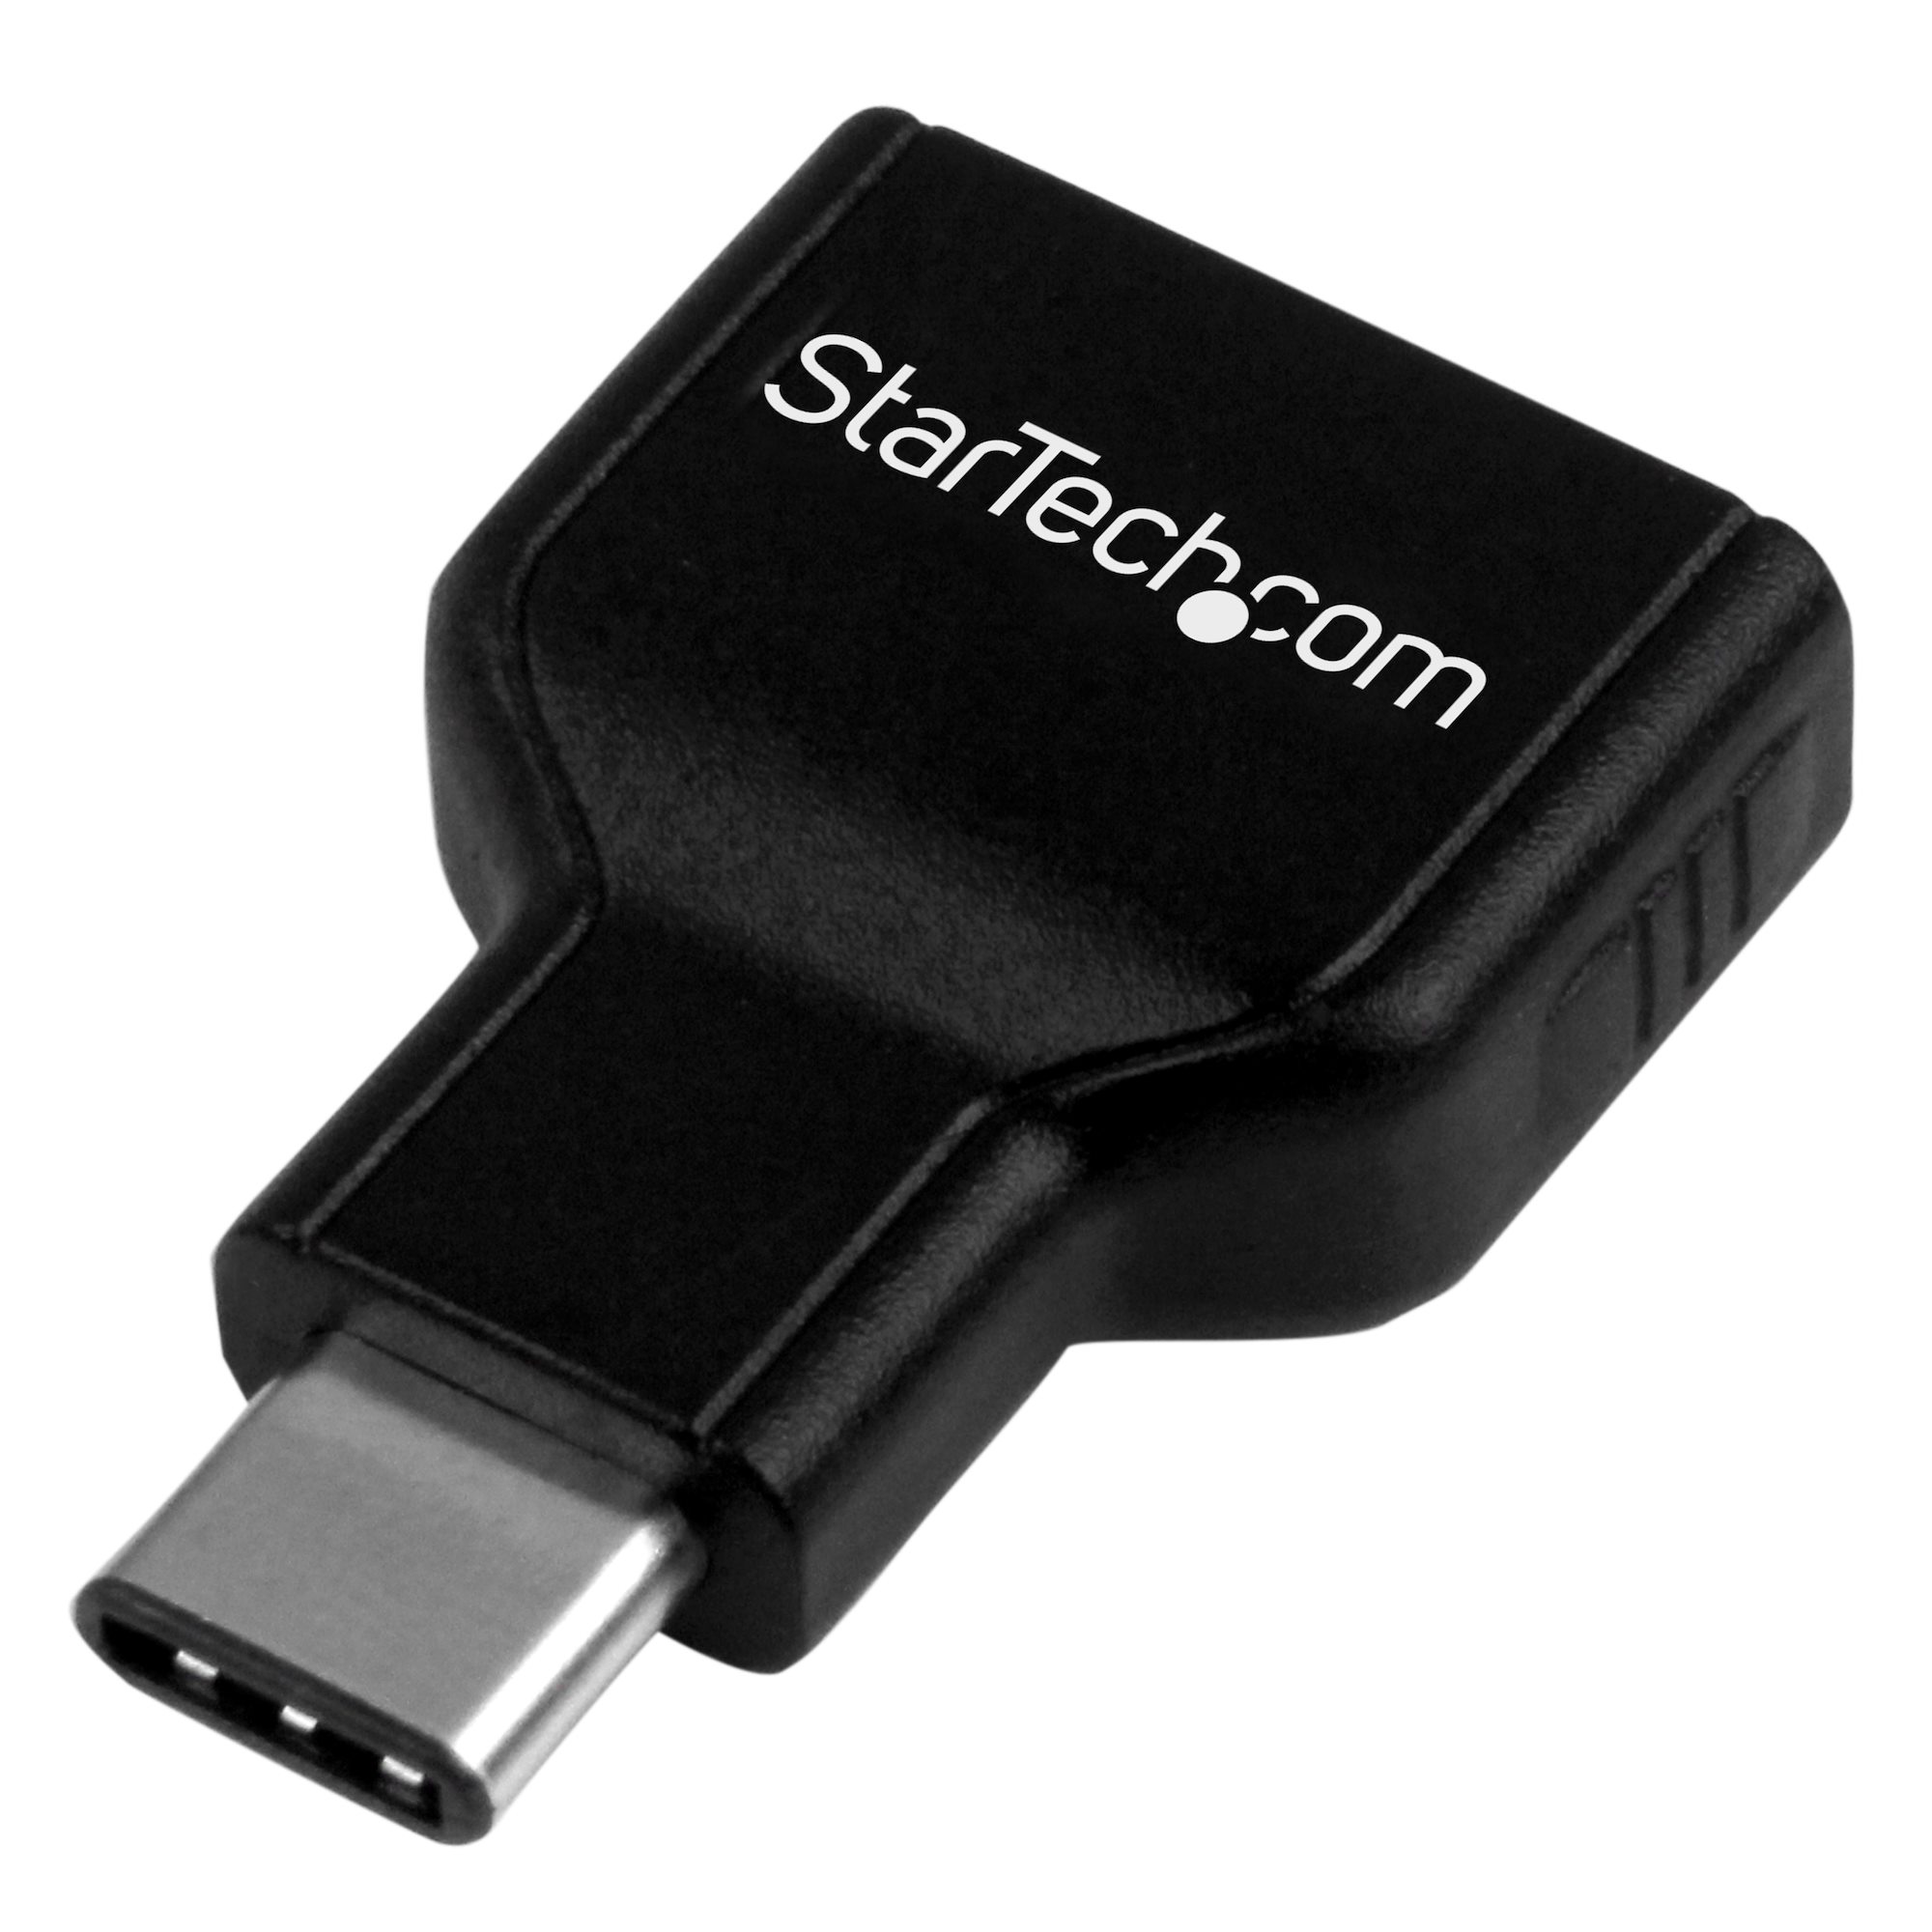 Tom Audreath reagere kalk USB-C to USB Adapter - M/F - USB 3.0 - USB-C Cables | StarTech.com